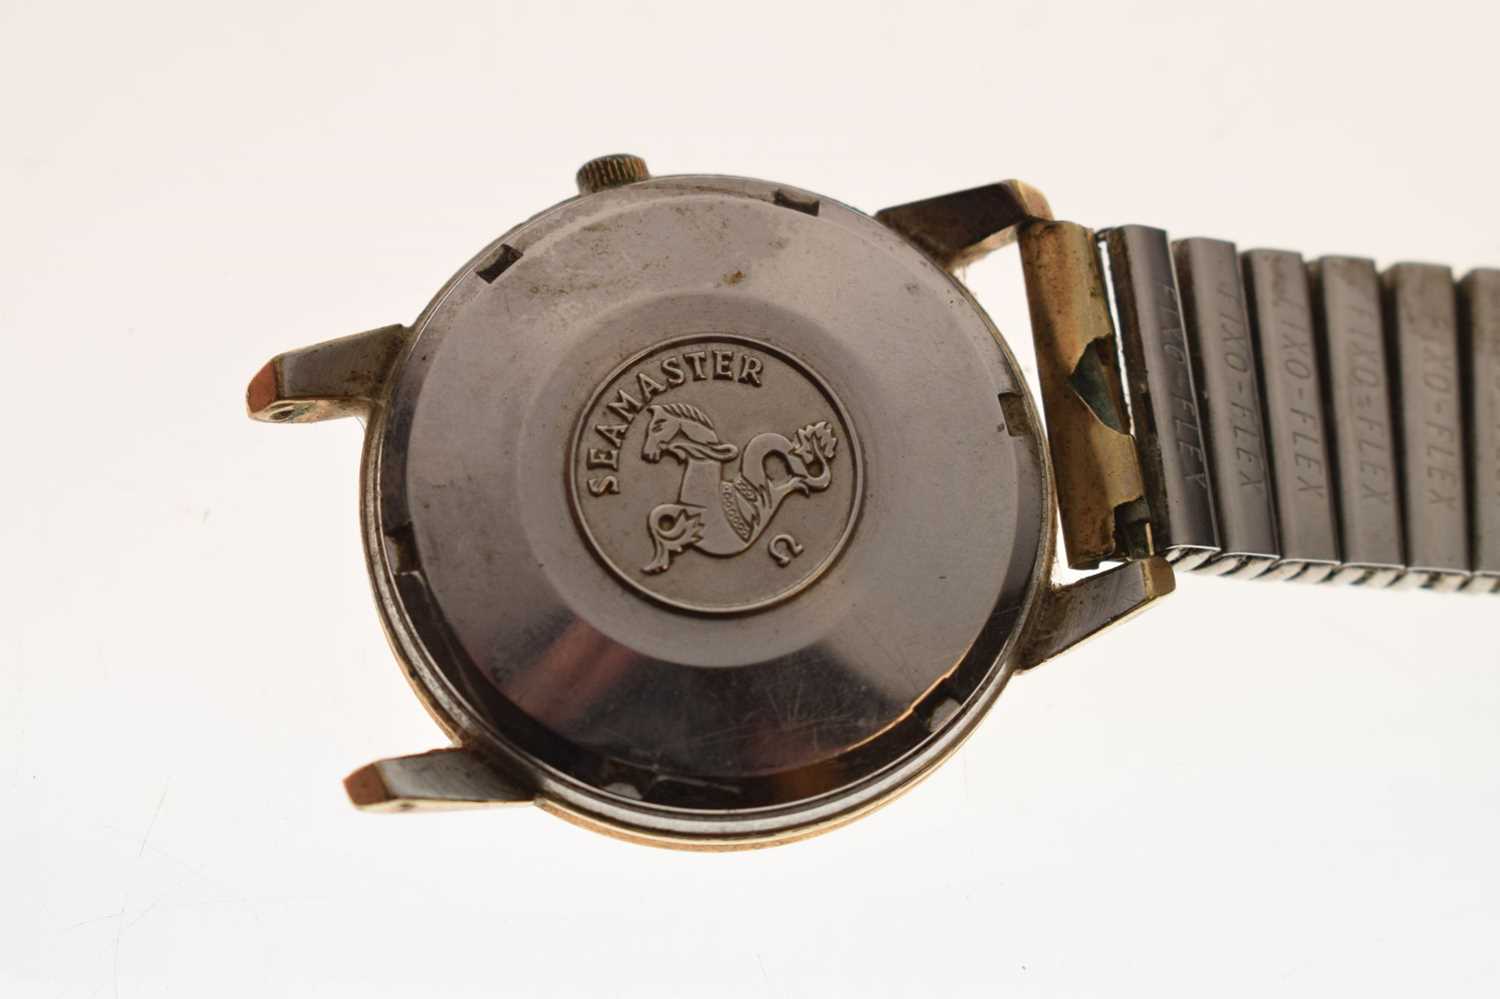 Omega - Gentleman's Seamaster gold plated bracelet watch - Image 7 of 8